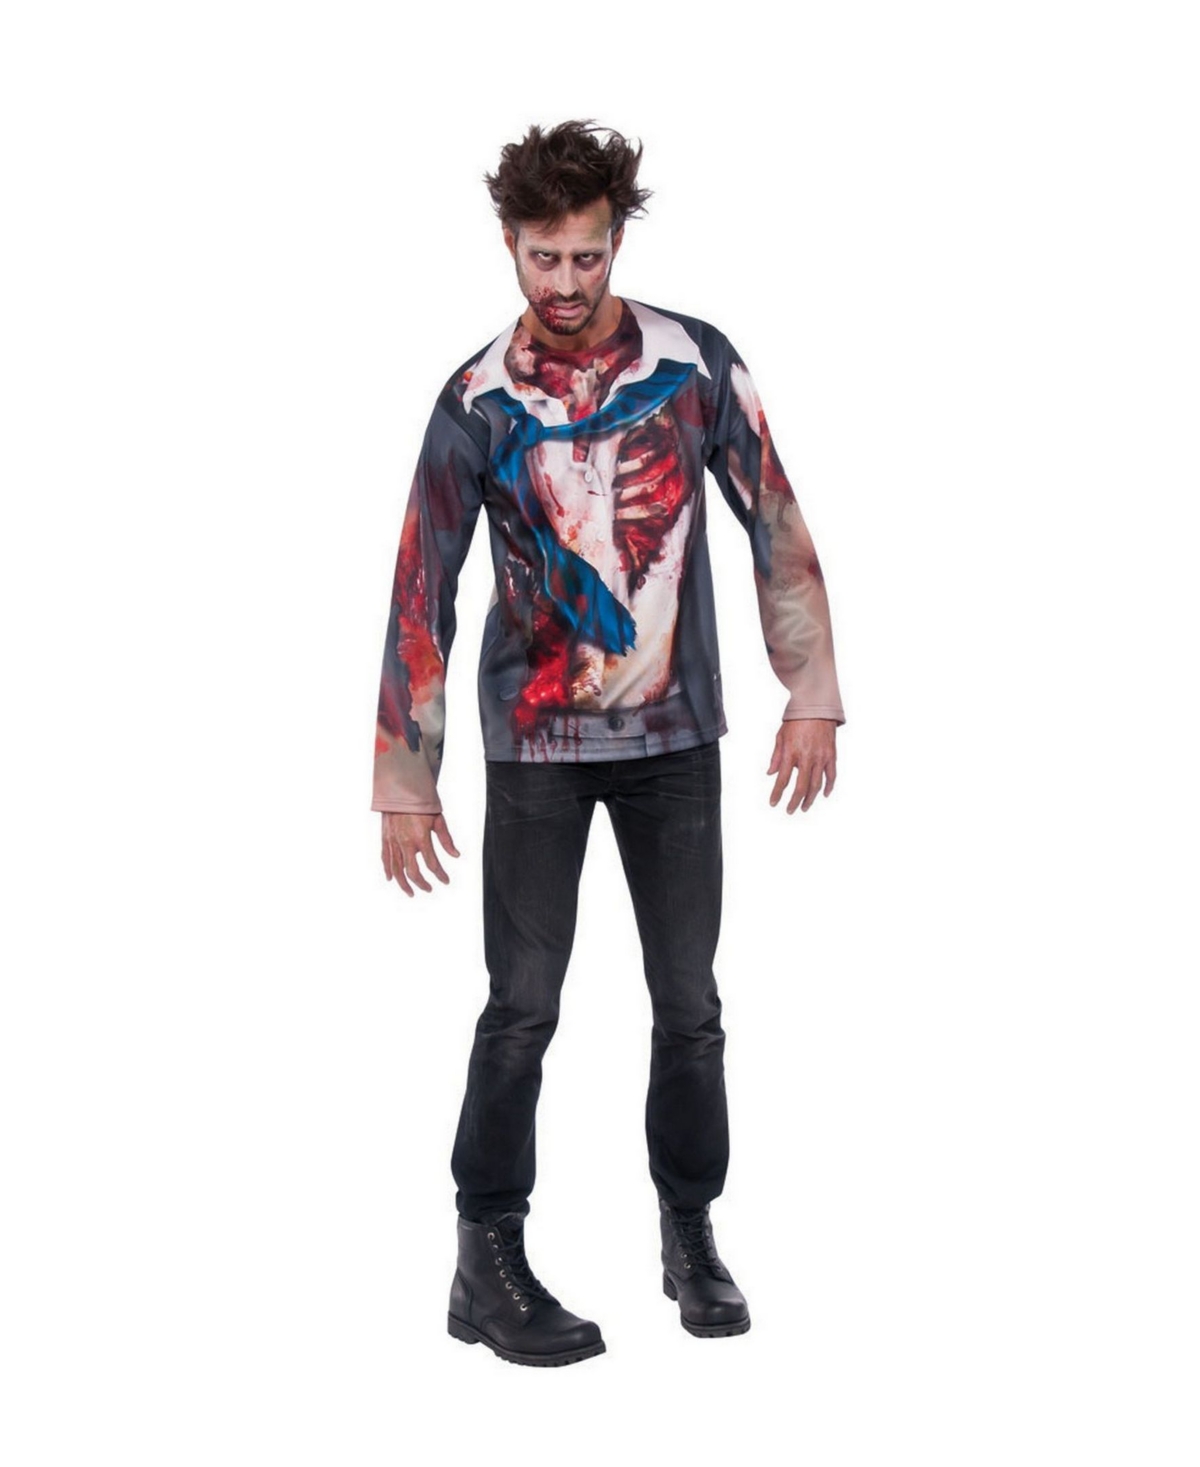 BuySeasons Men's Zombie Adult Costume